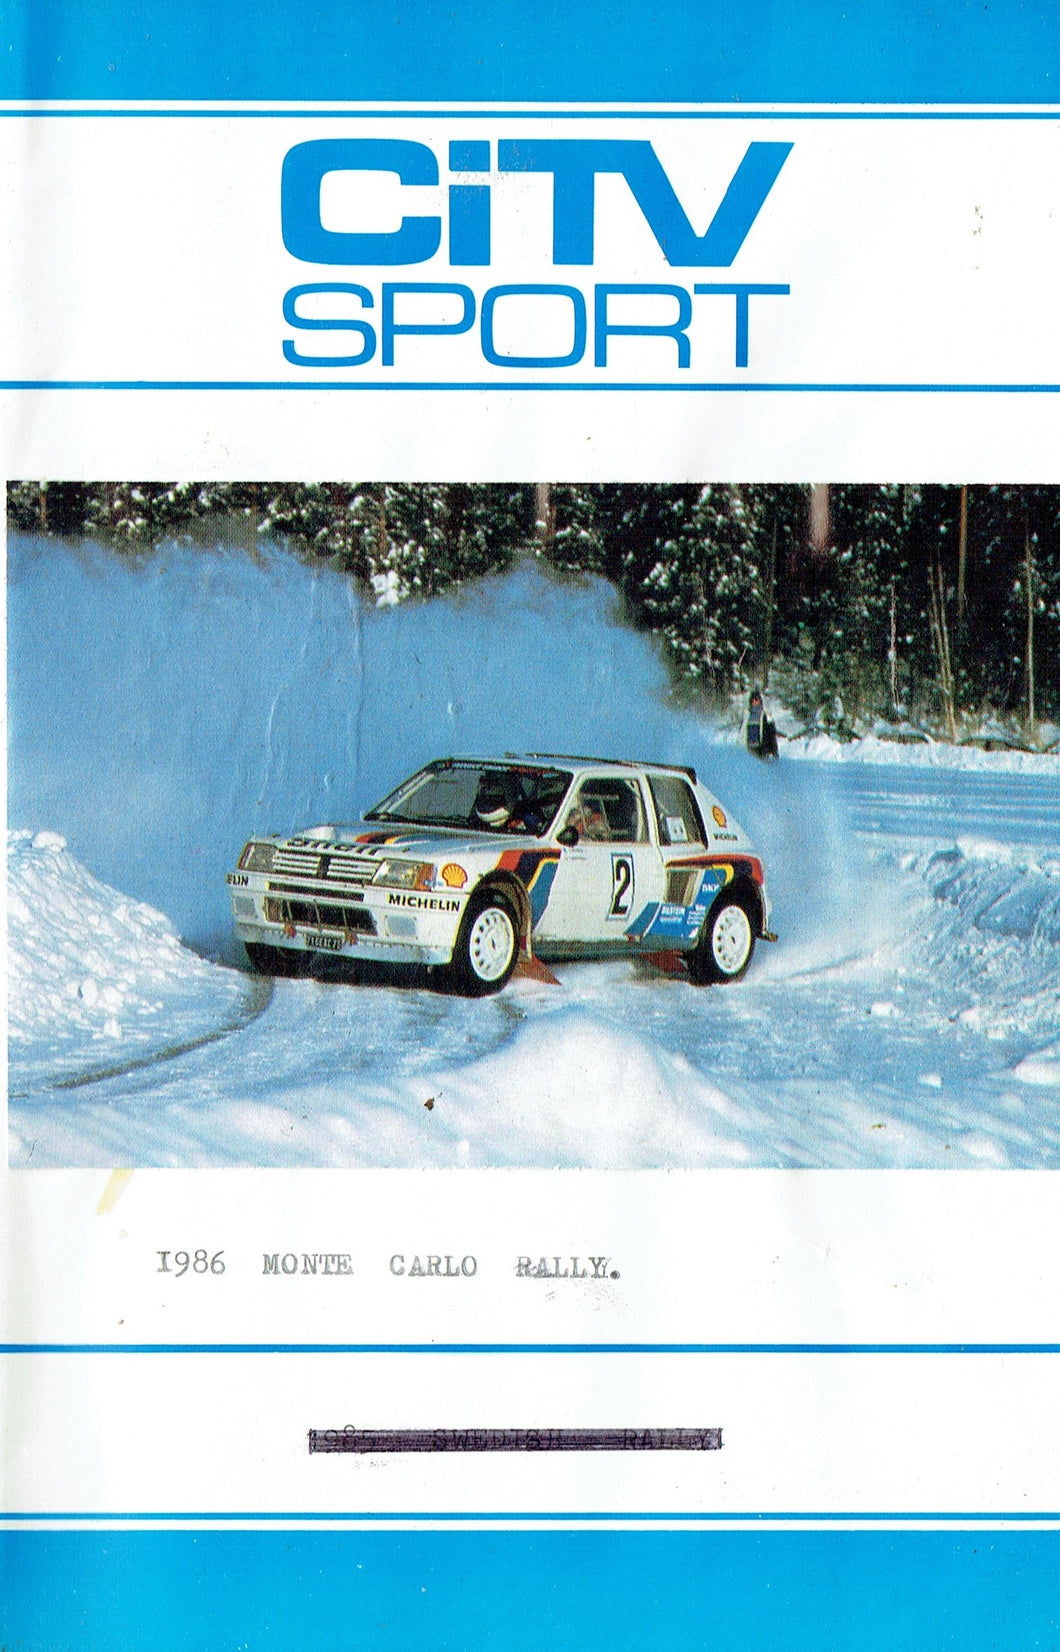 1986 Monte Carlo Rally - World Rally Championship - CiTV Sport [VHS]